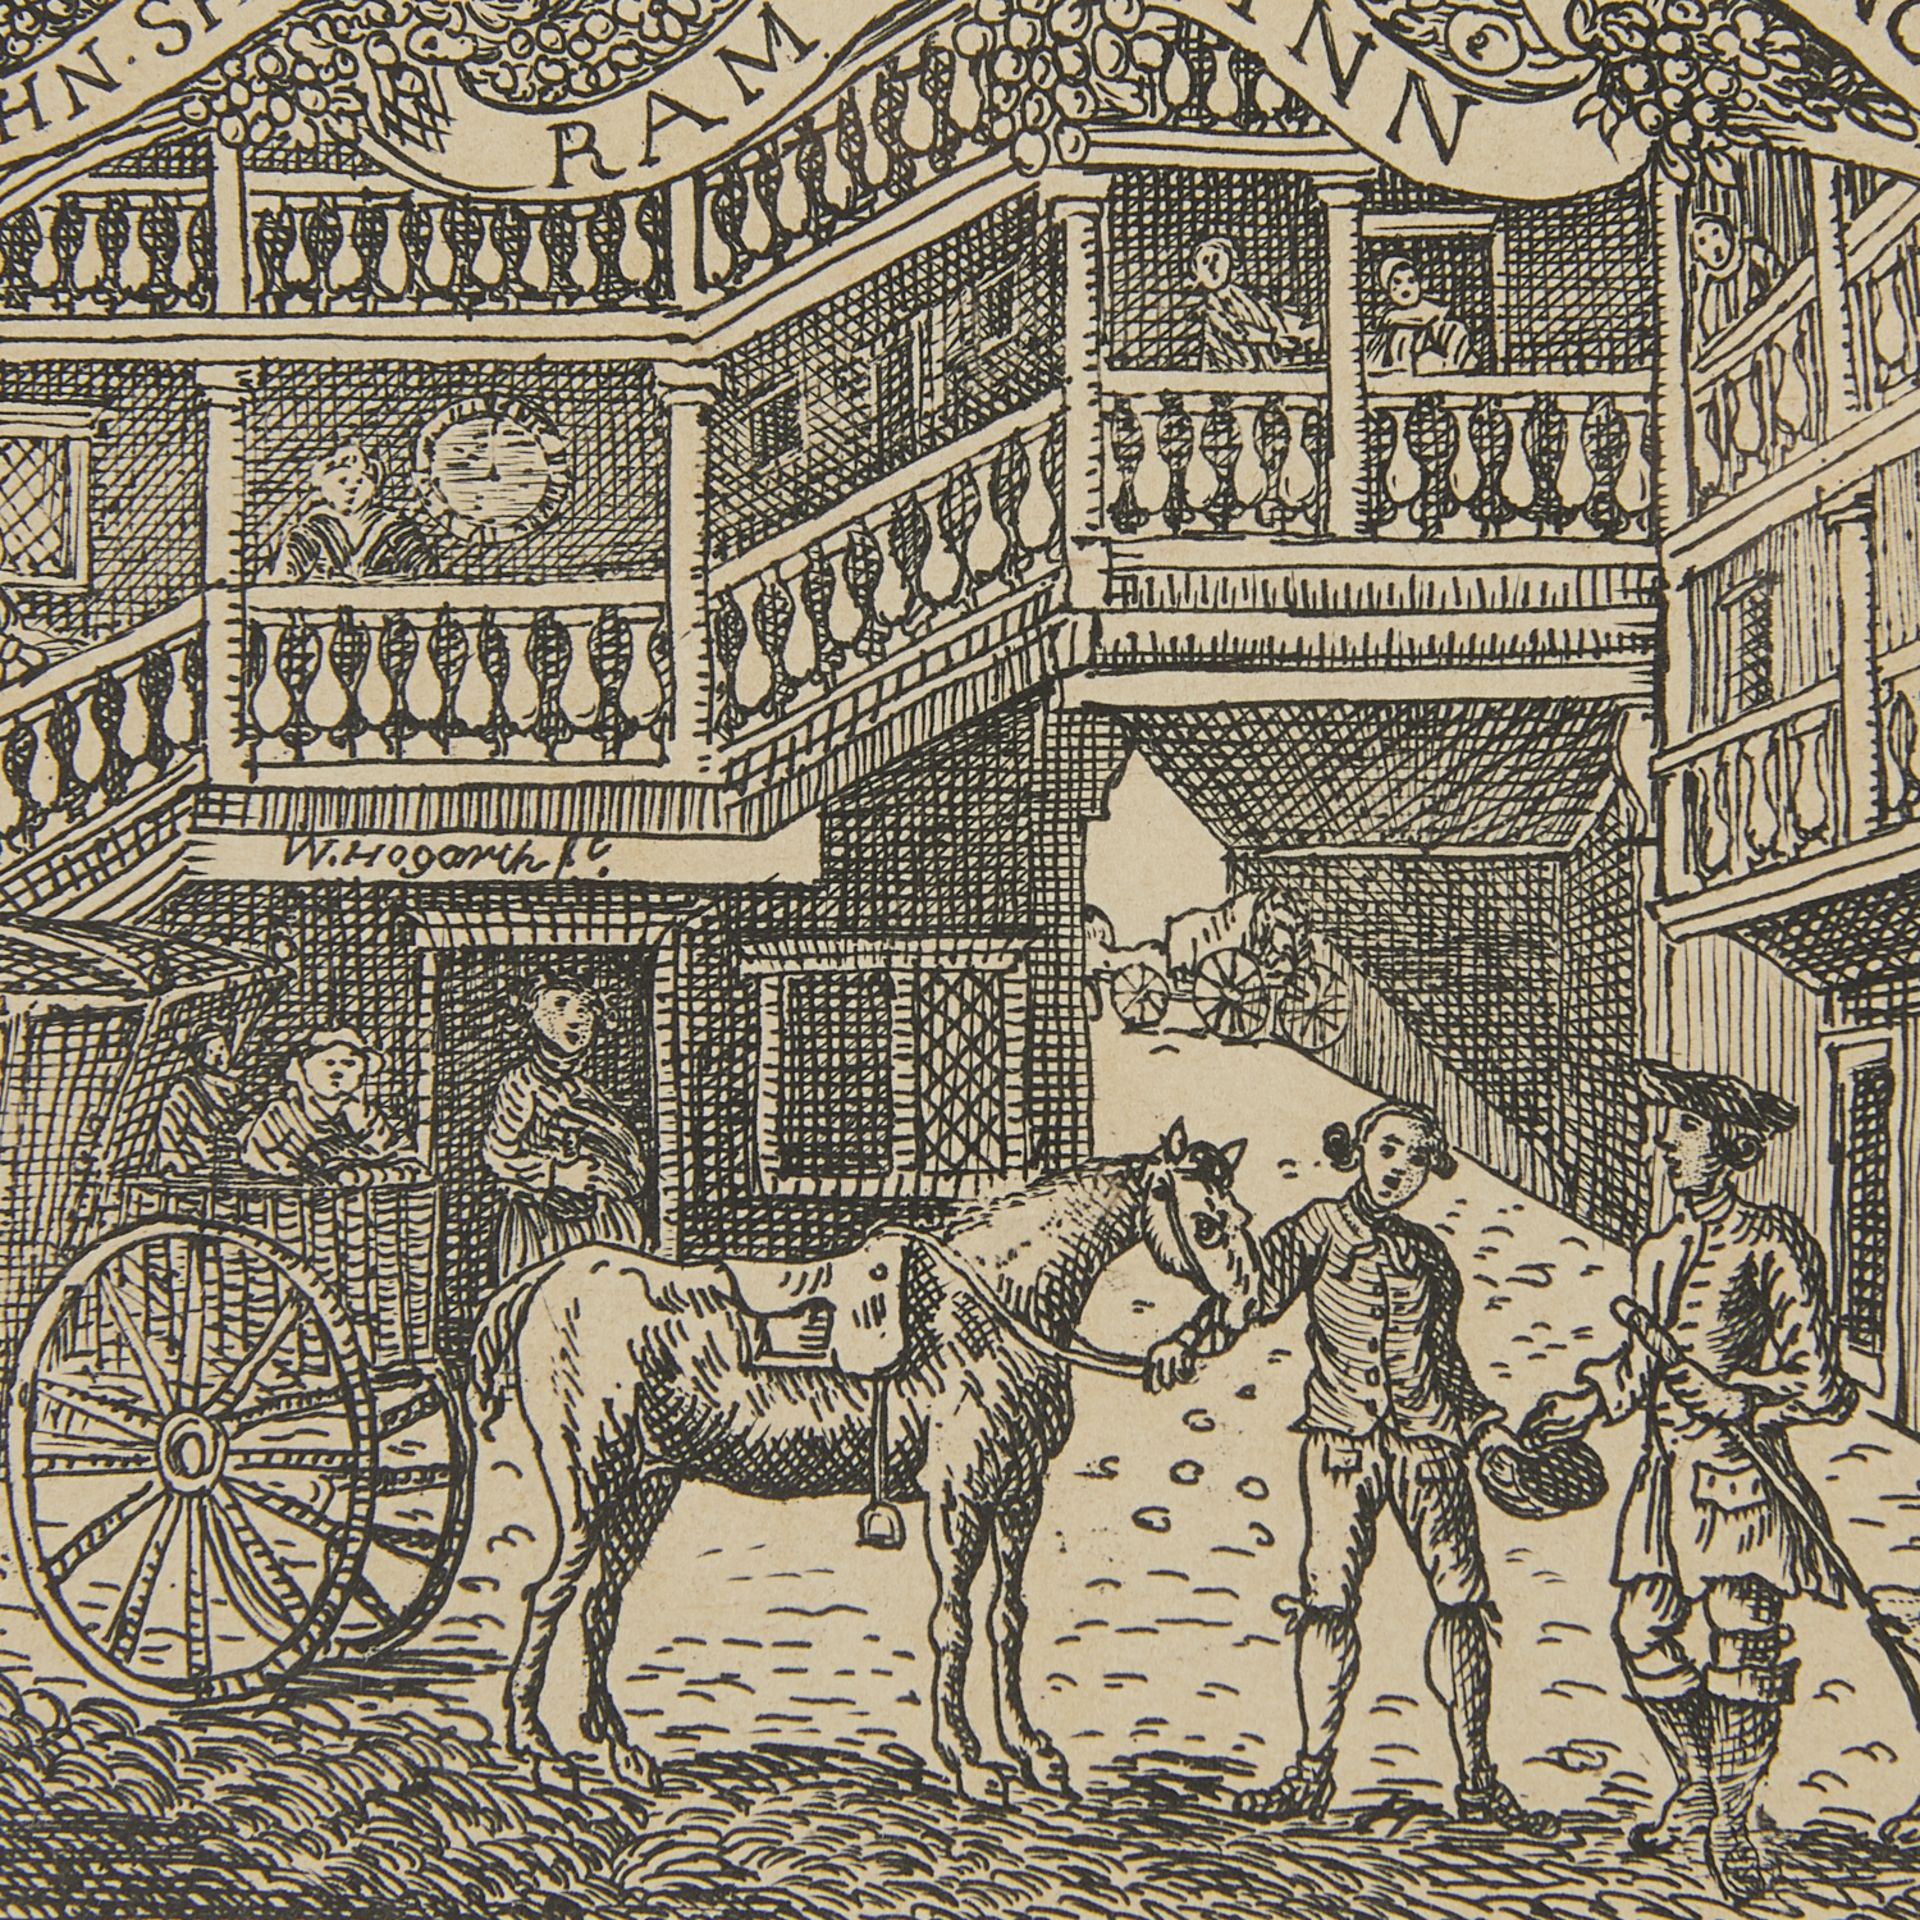 After William Hogarth "Ram Inn" Engraving - Image 3 of 5